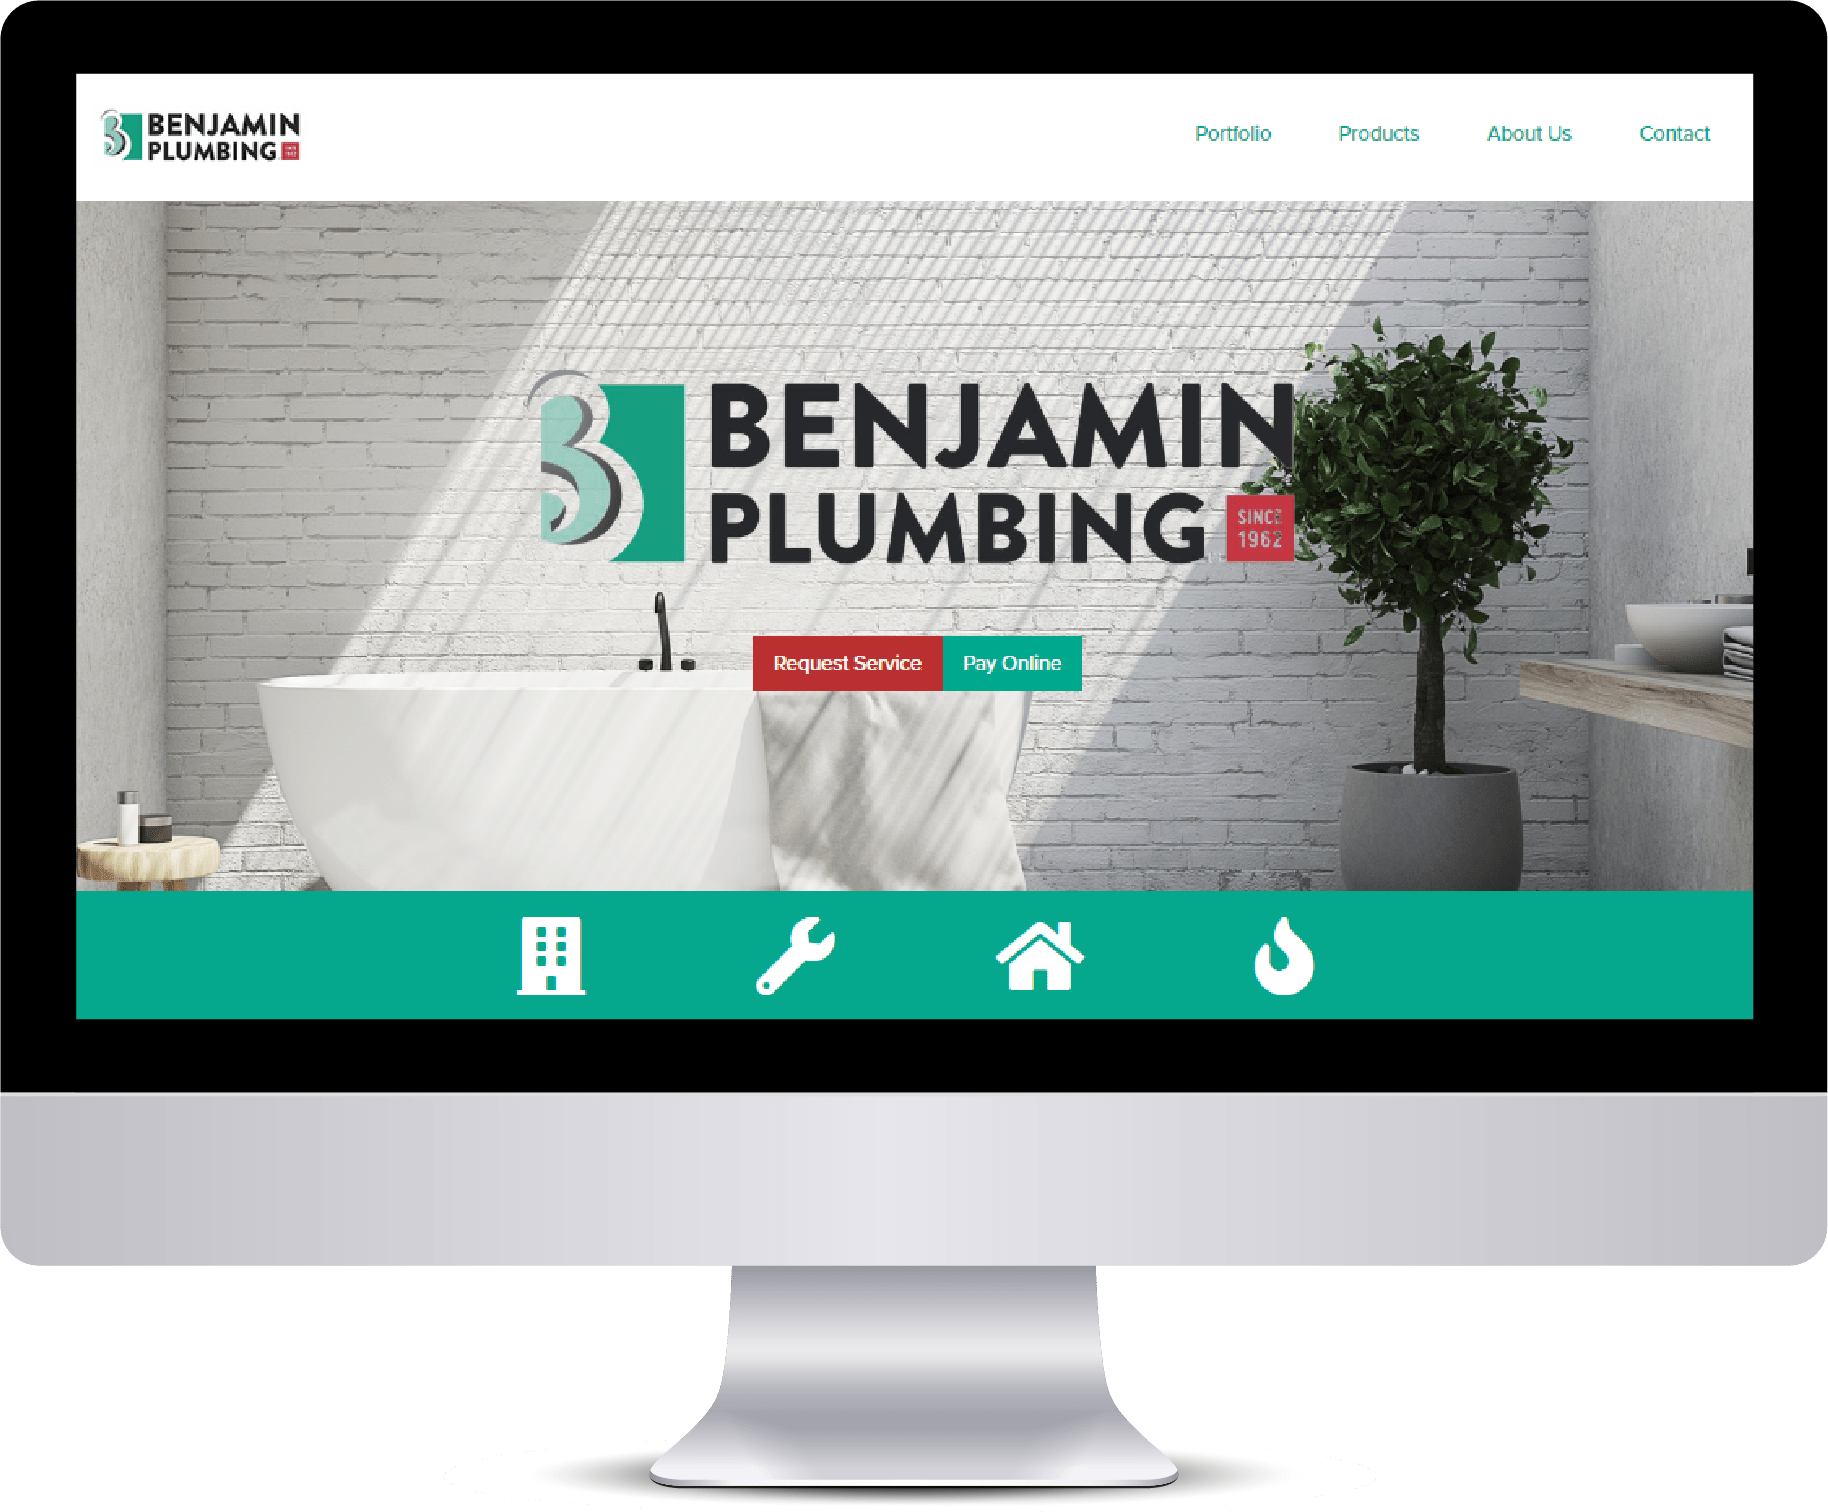 Benjamin Plumbing home page on desktop